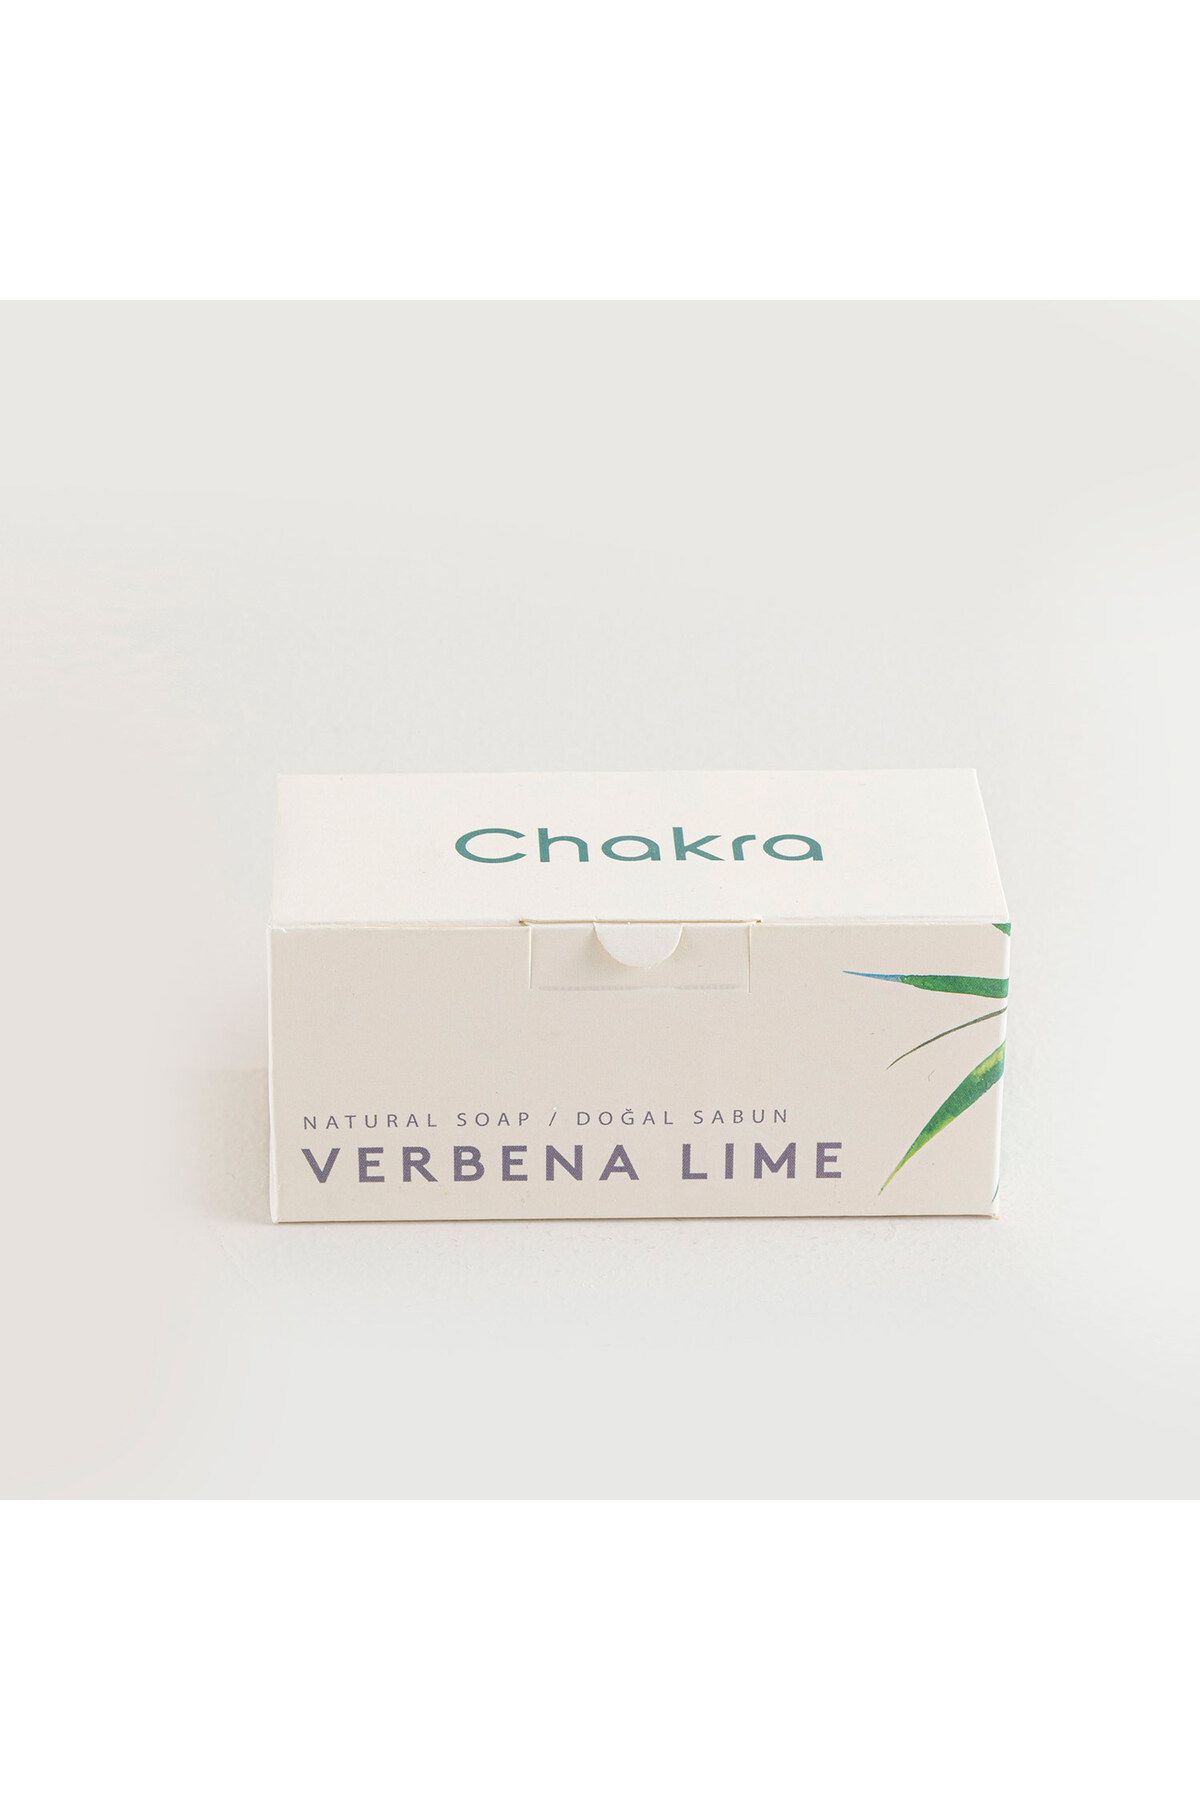 Chakra Doğal Sabun 10 X 22,5 G Verbena Lime